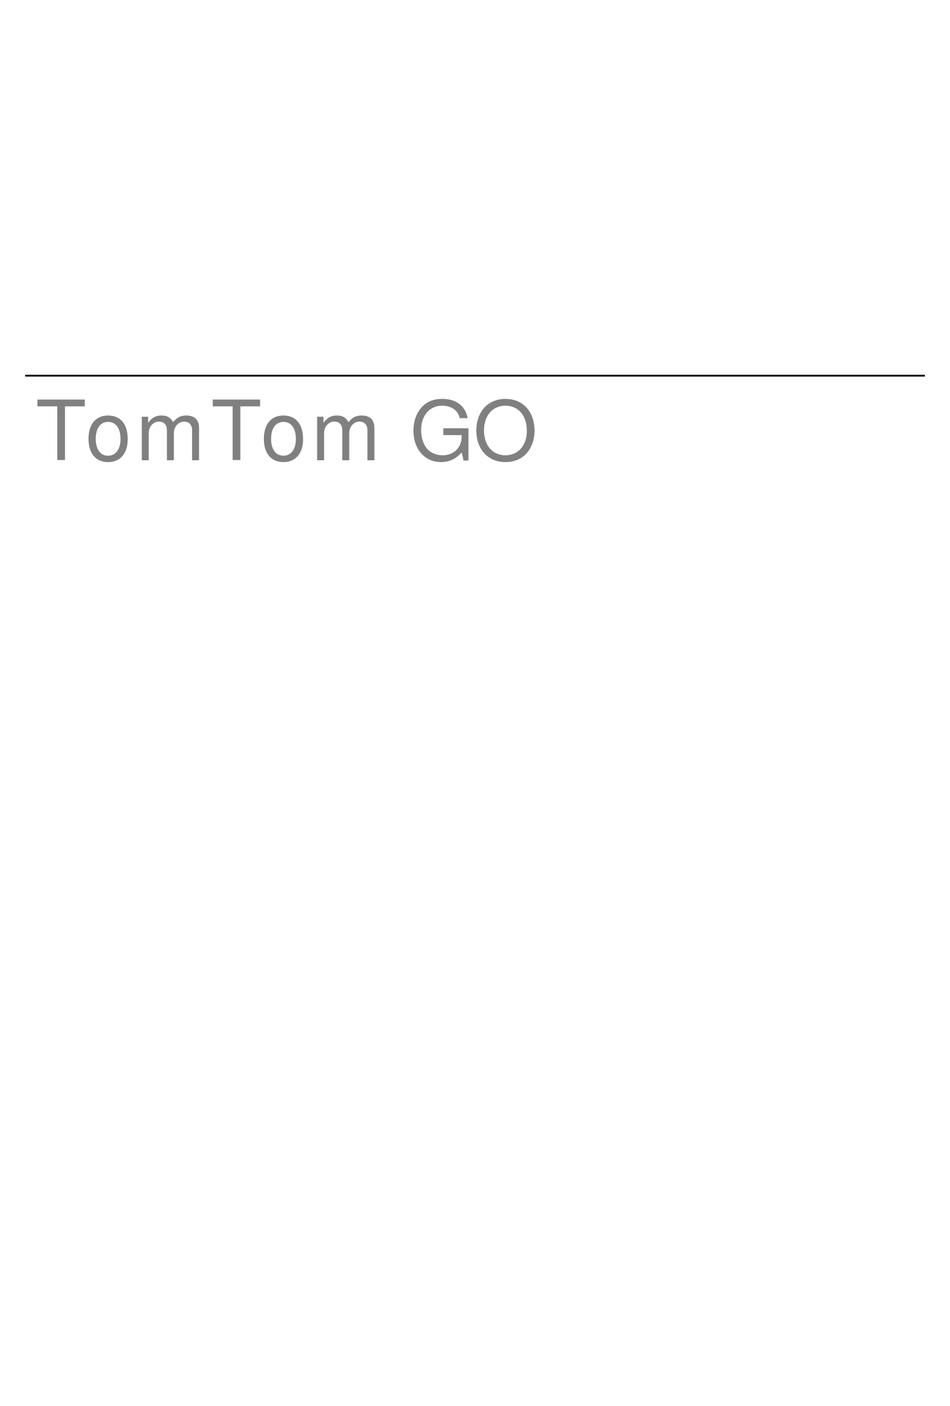 TOMTOM GO 520 USER MANUAL Pdf Download | ManualsLib